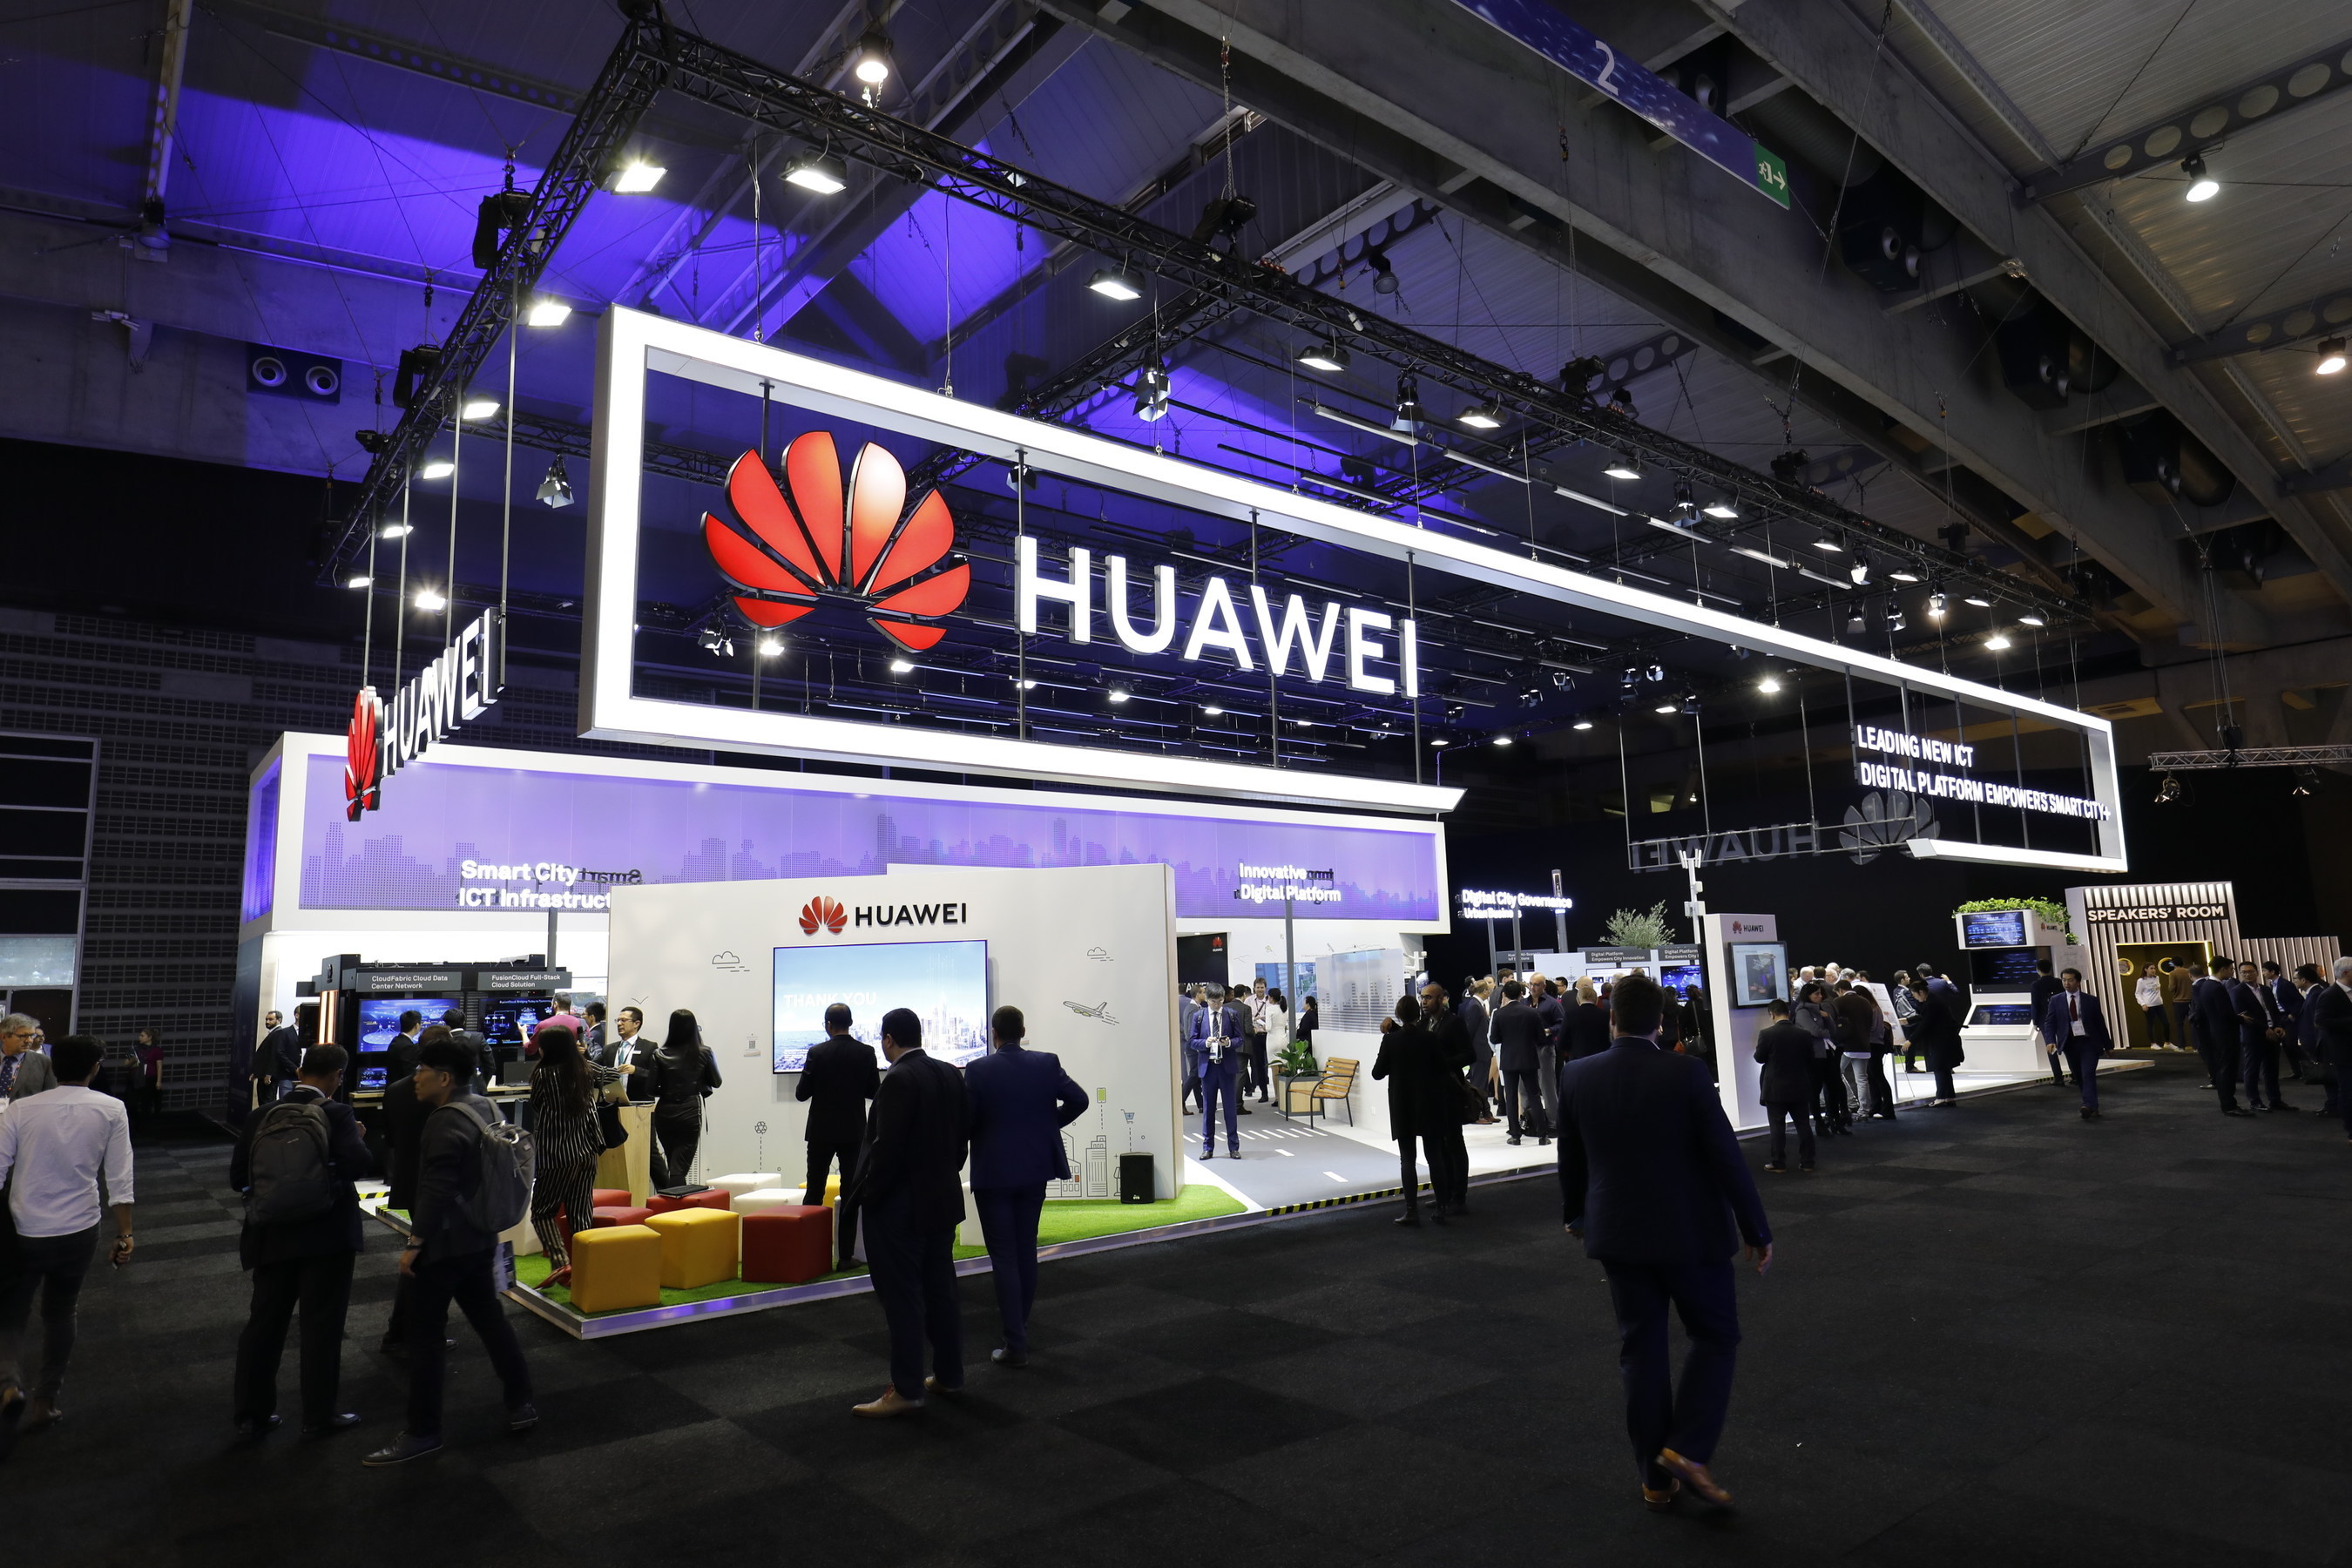 Huawei showcased its digital platform at Smart City Expo World Congress 2018